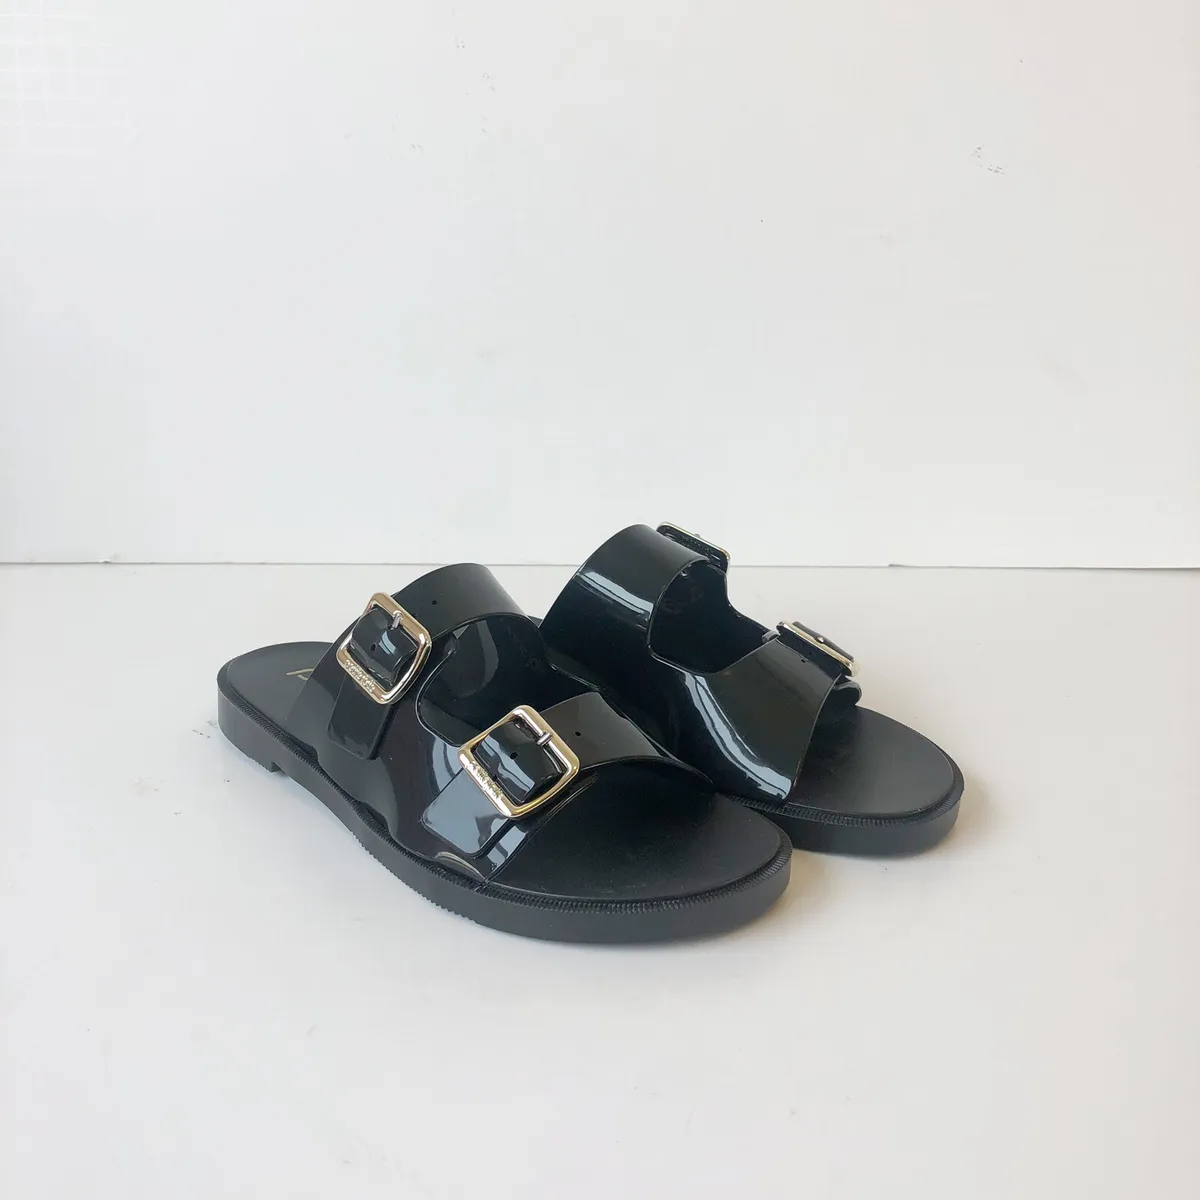 Petite Jolie Sandals Slide Black Double Buckle Strap Made in Brazil Size 6.5